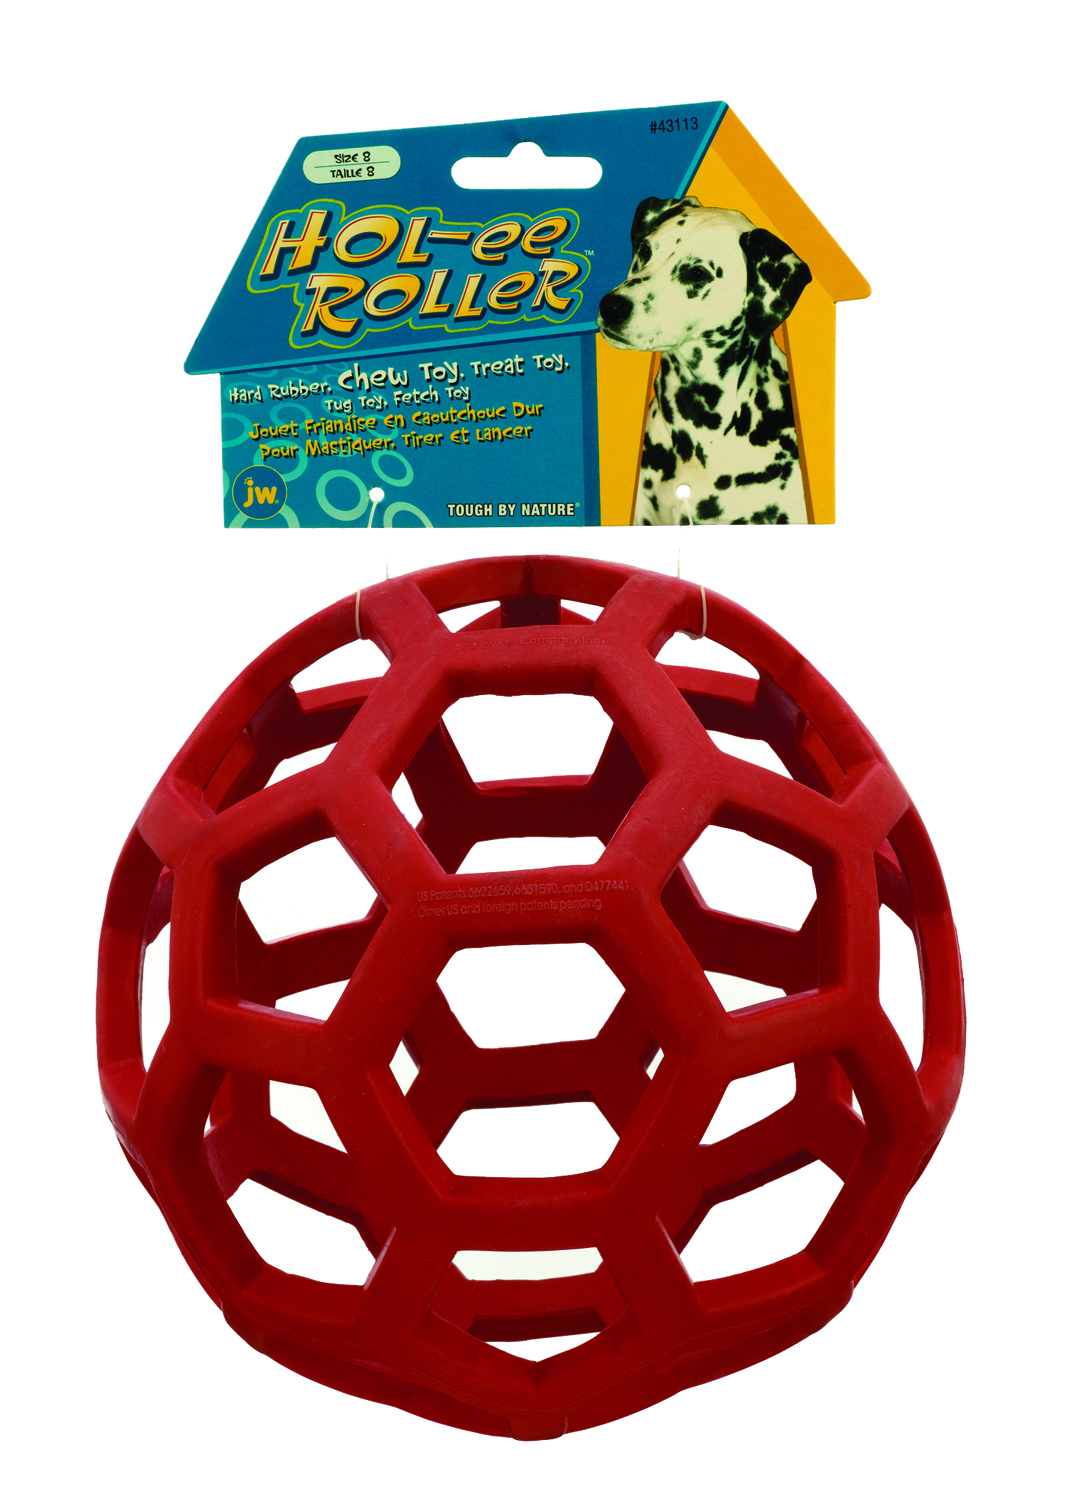 Hol-ee roller dog toy - size 8